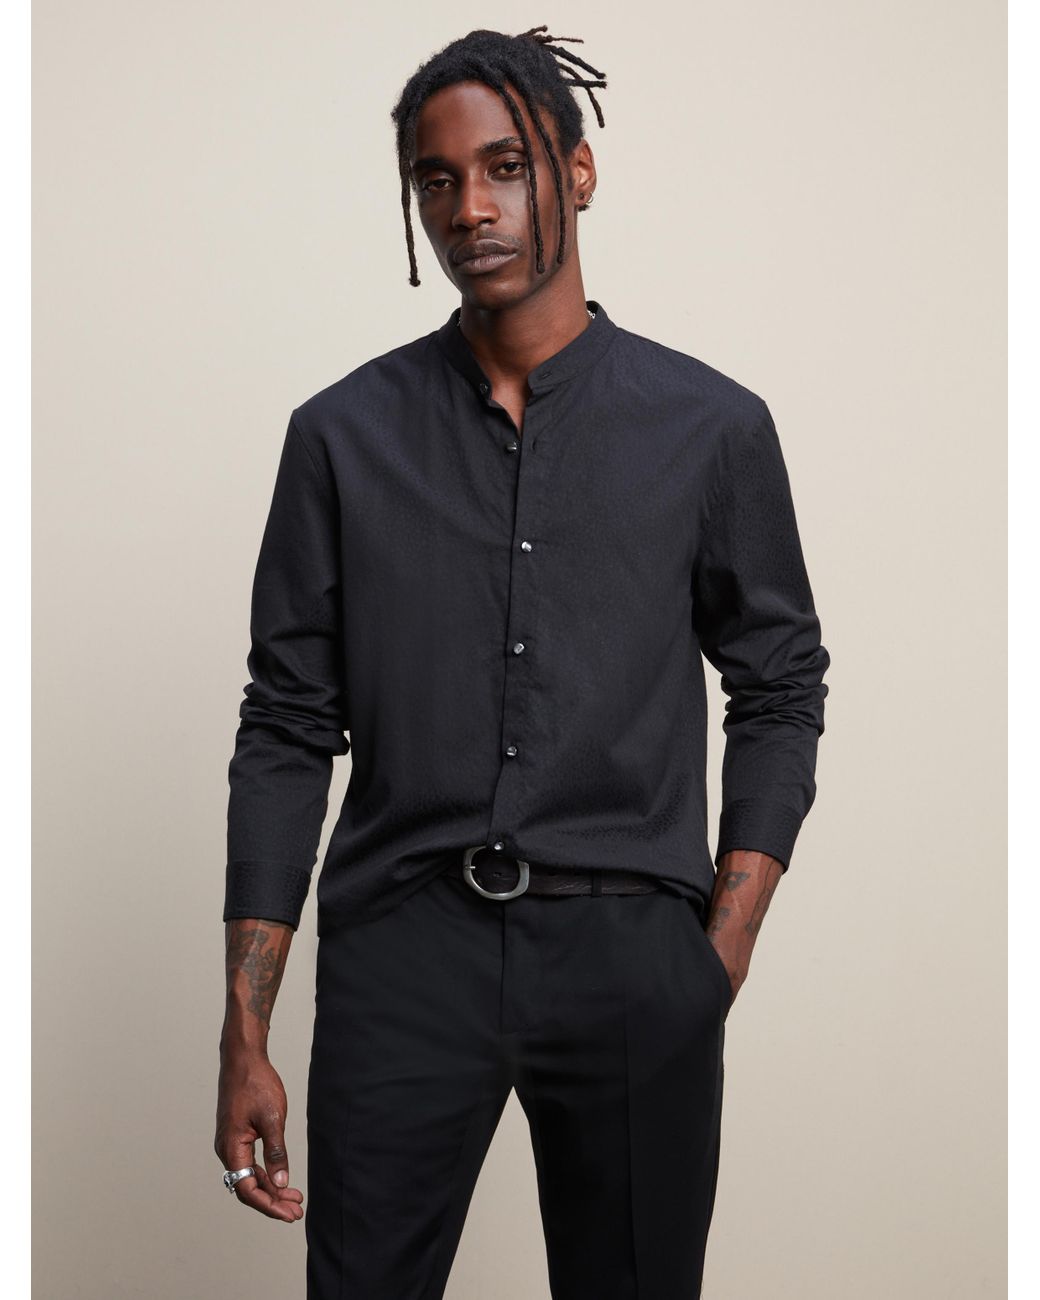 John Varvatos Band Collar Shirt in Black for Men | Lyst